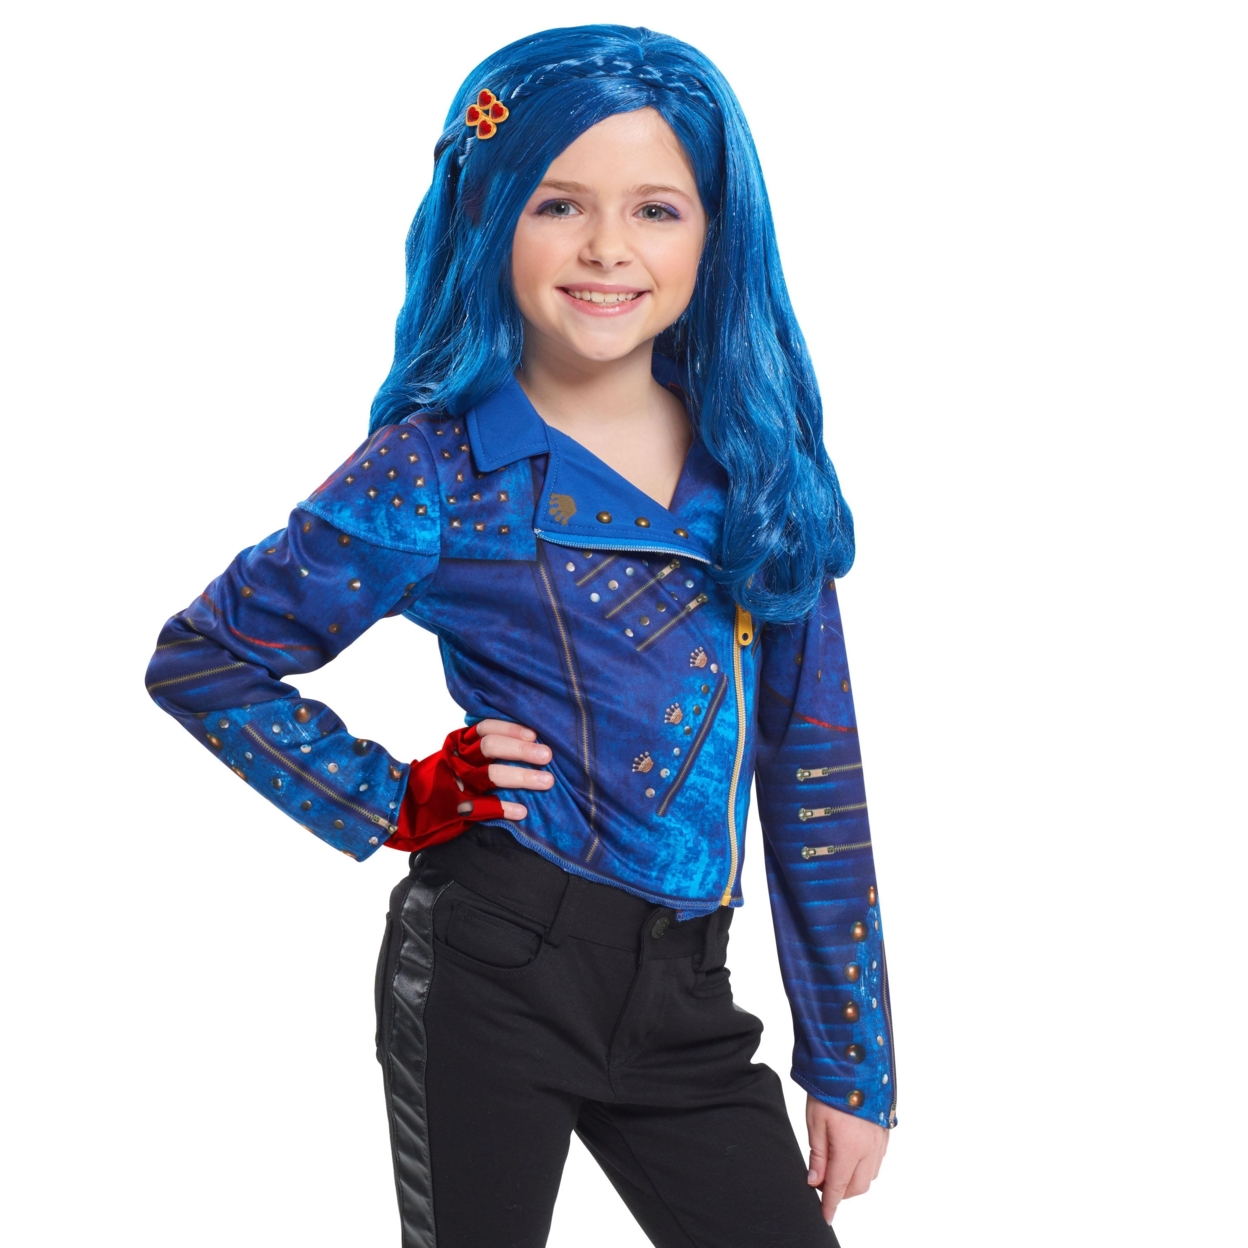 Descendants 2 Evie Character Evilicious Blue Wig Heart-Shaped Barrette Disney Just Play